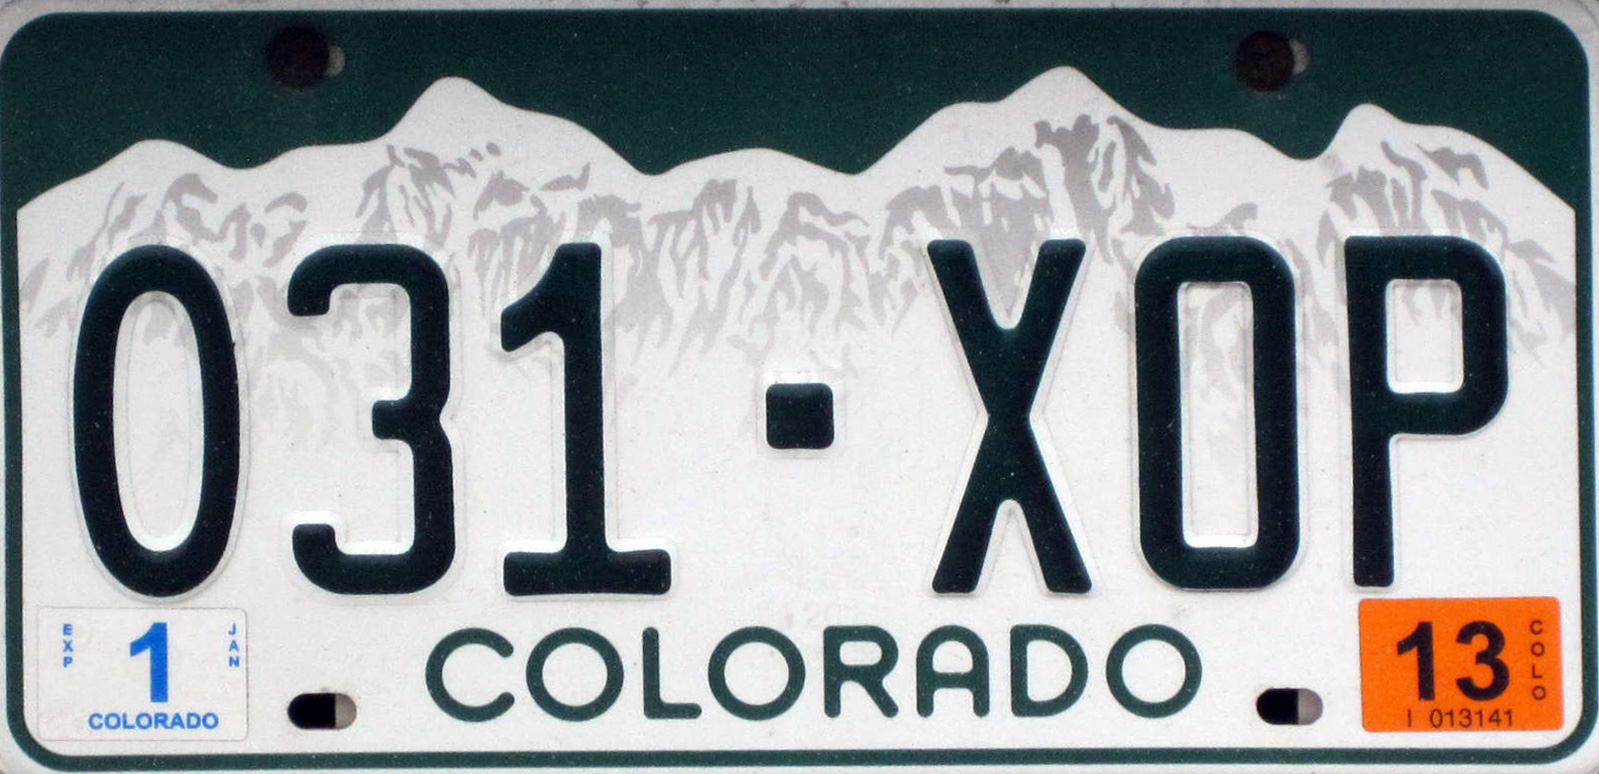 License plate o or 0 florida